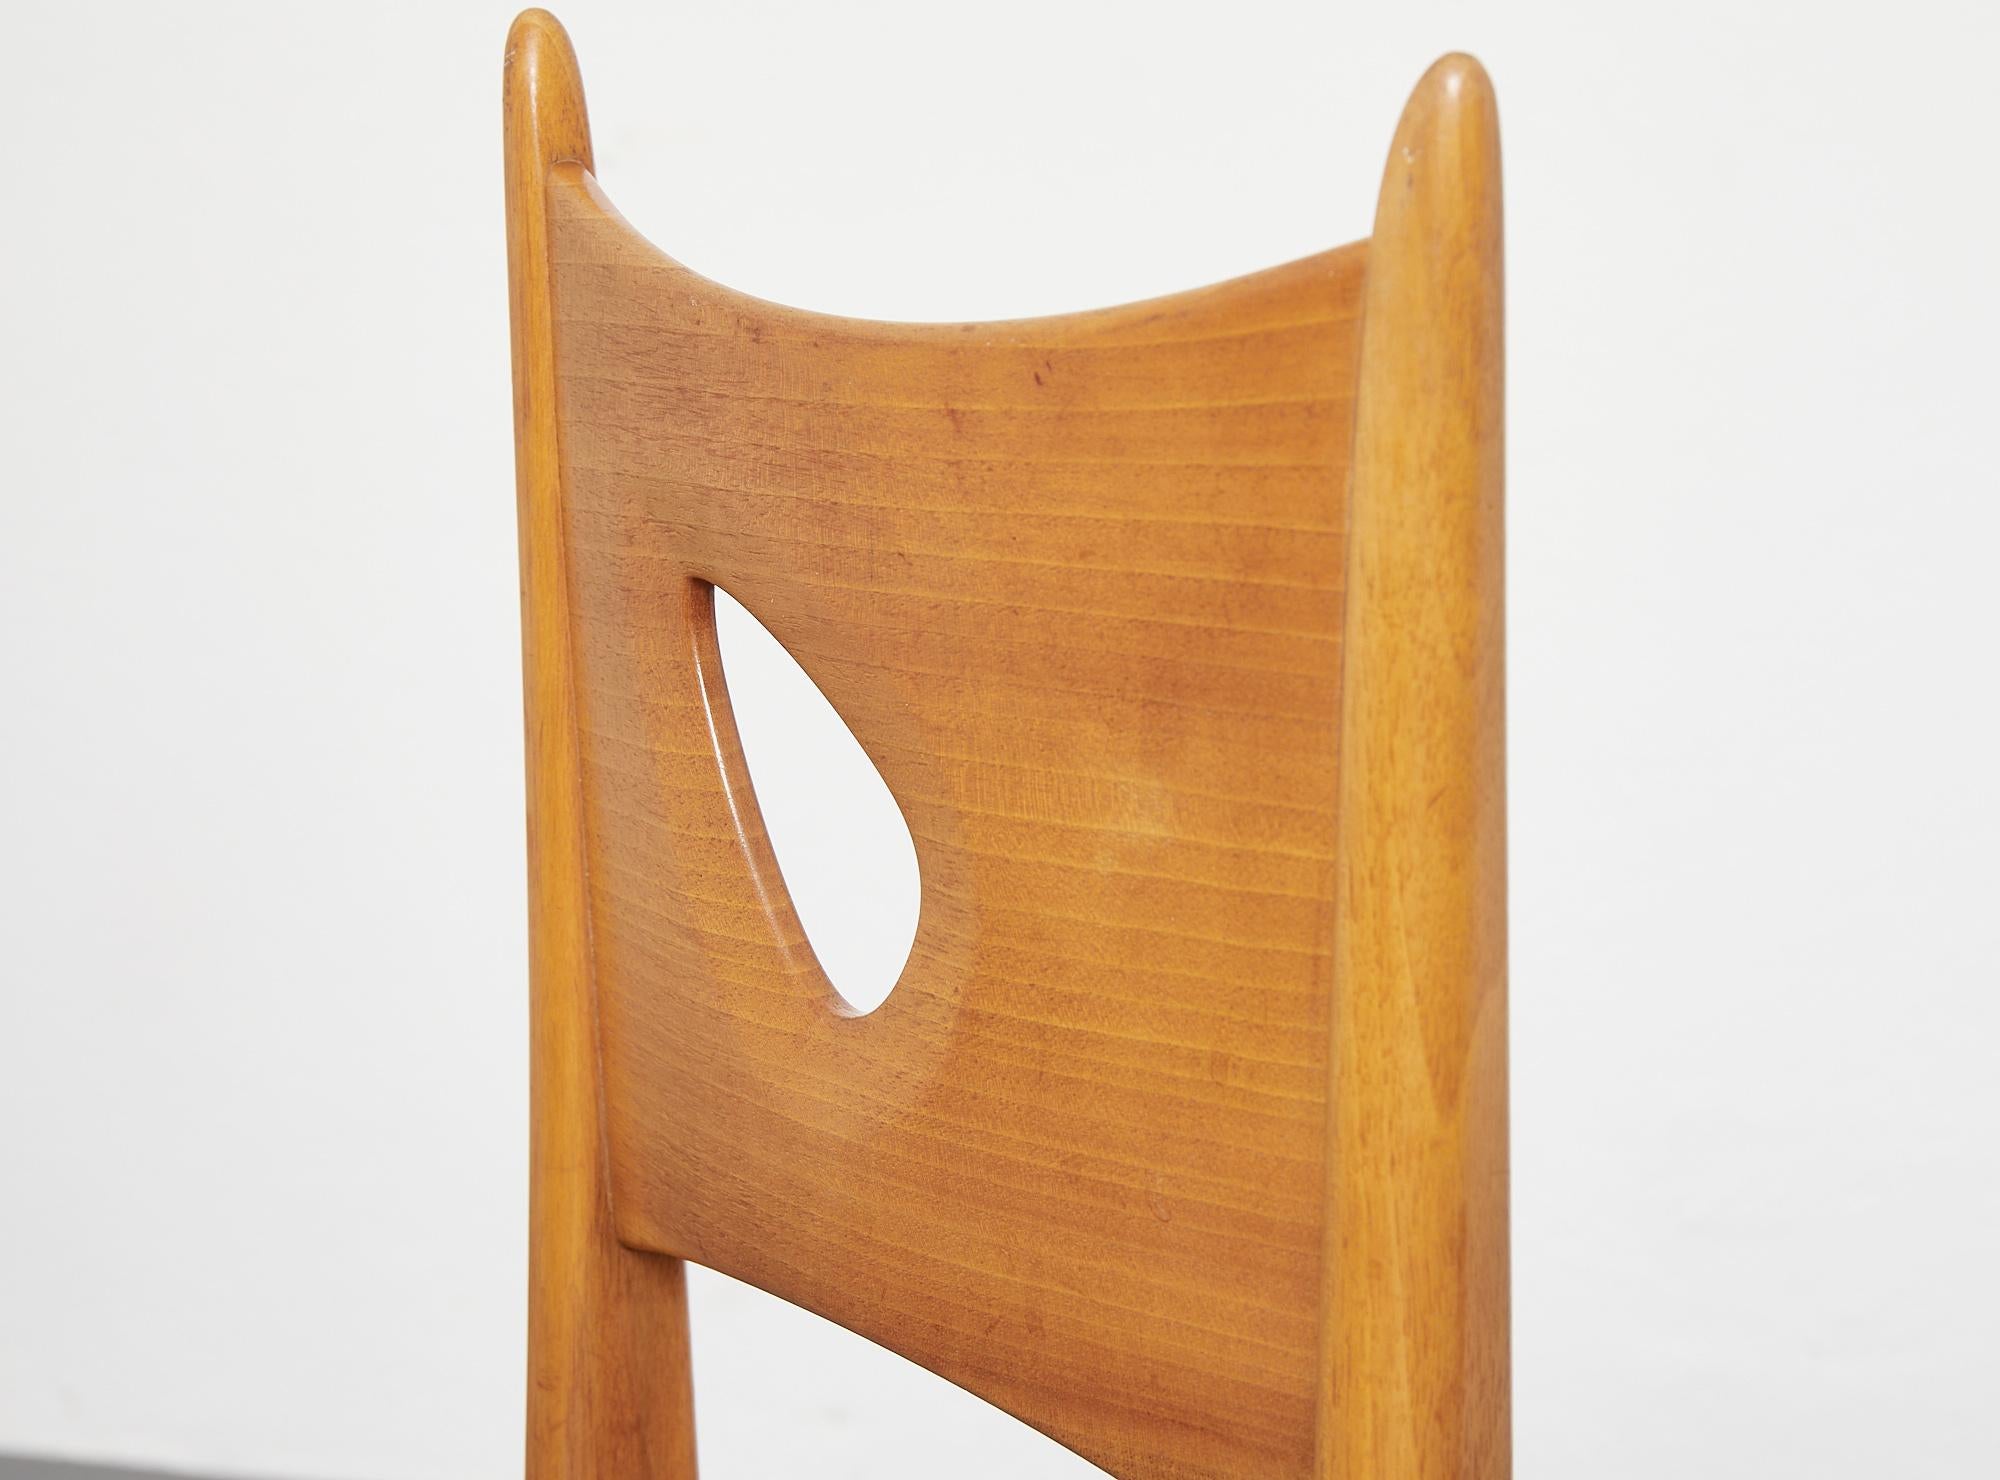 European Sculptural Wooden High Back Chair Anthroposophy France or Switzerland, 1950